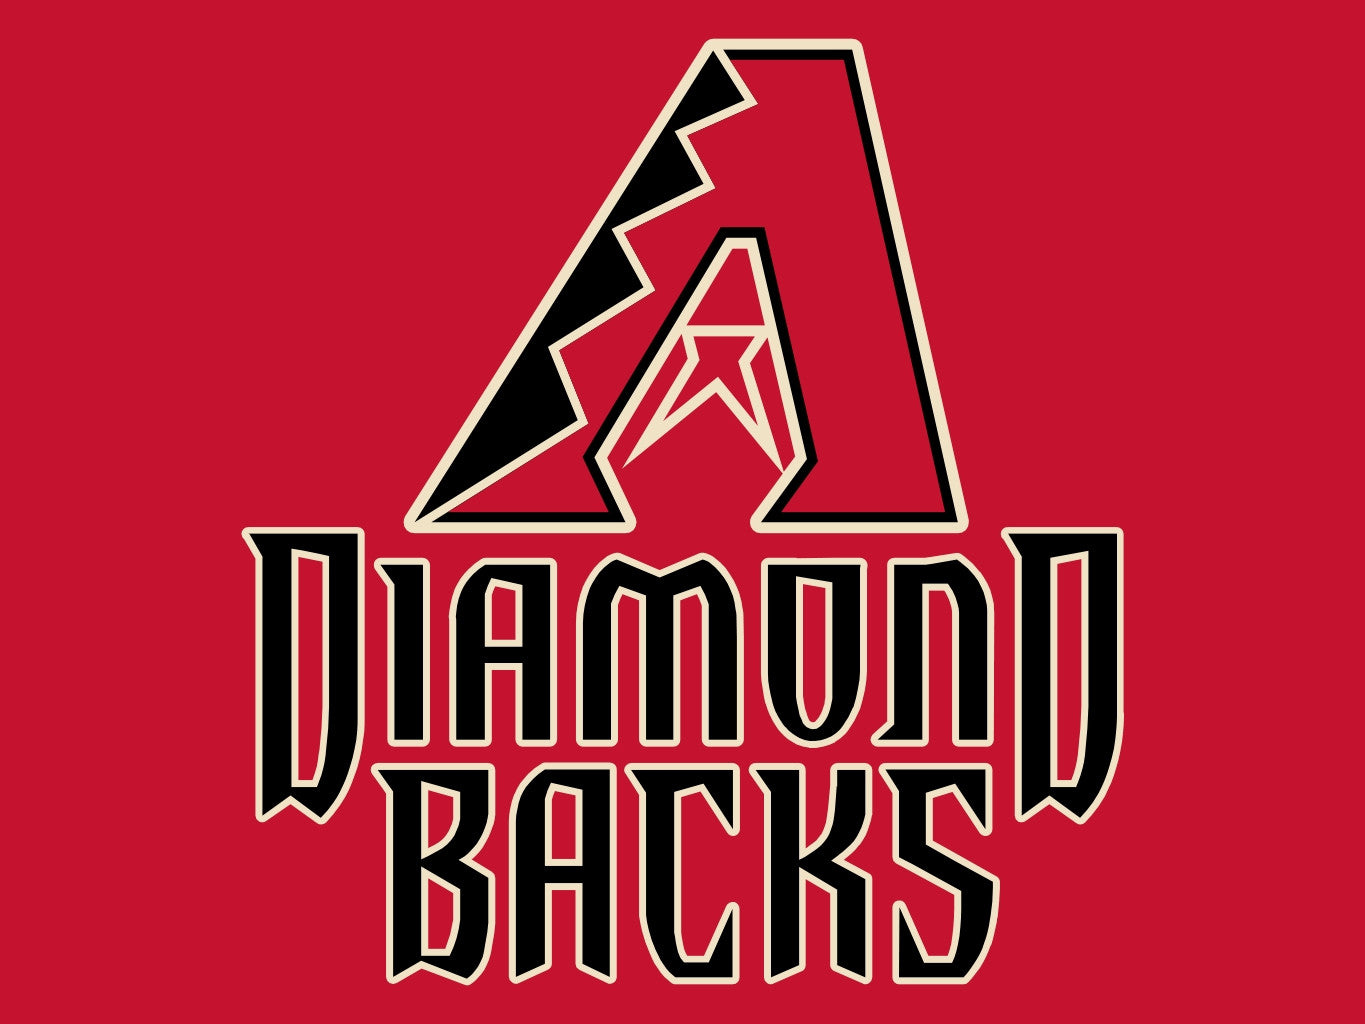 Arizona Diamondbacks Apparel & Gear.